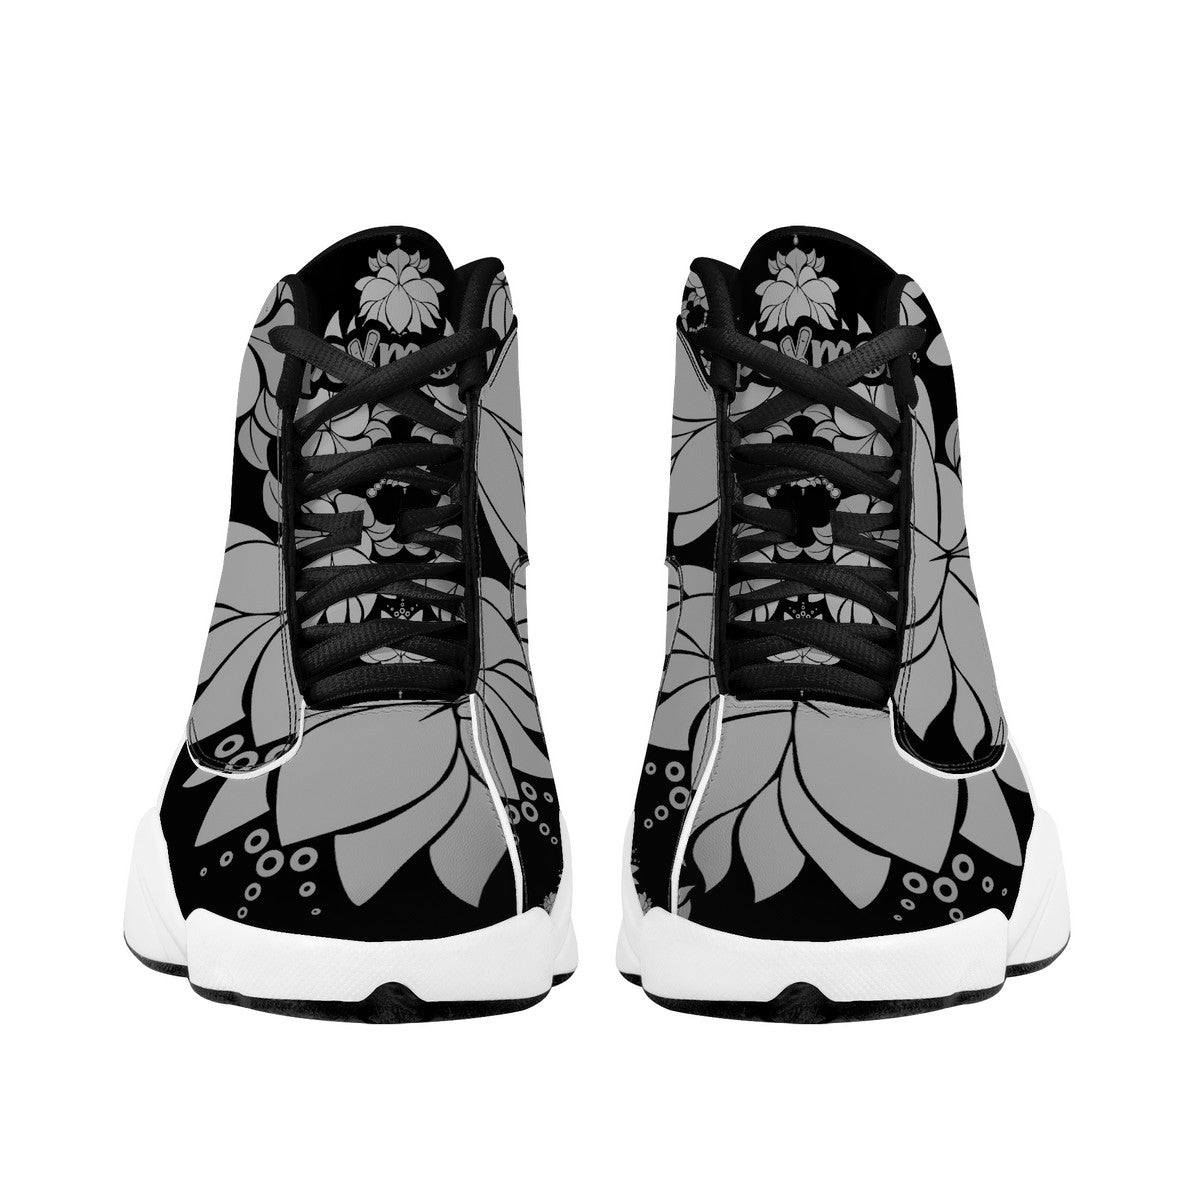 "Mono Lotus" Basketball Shoes